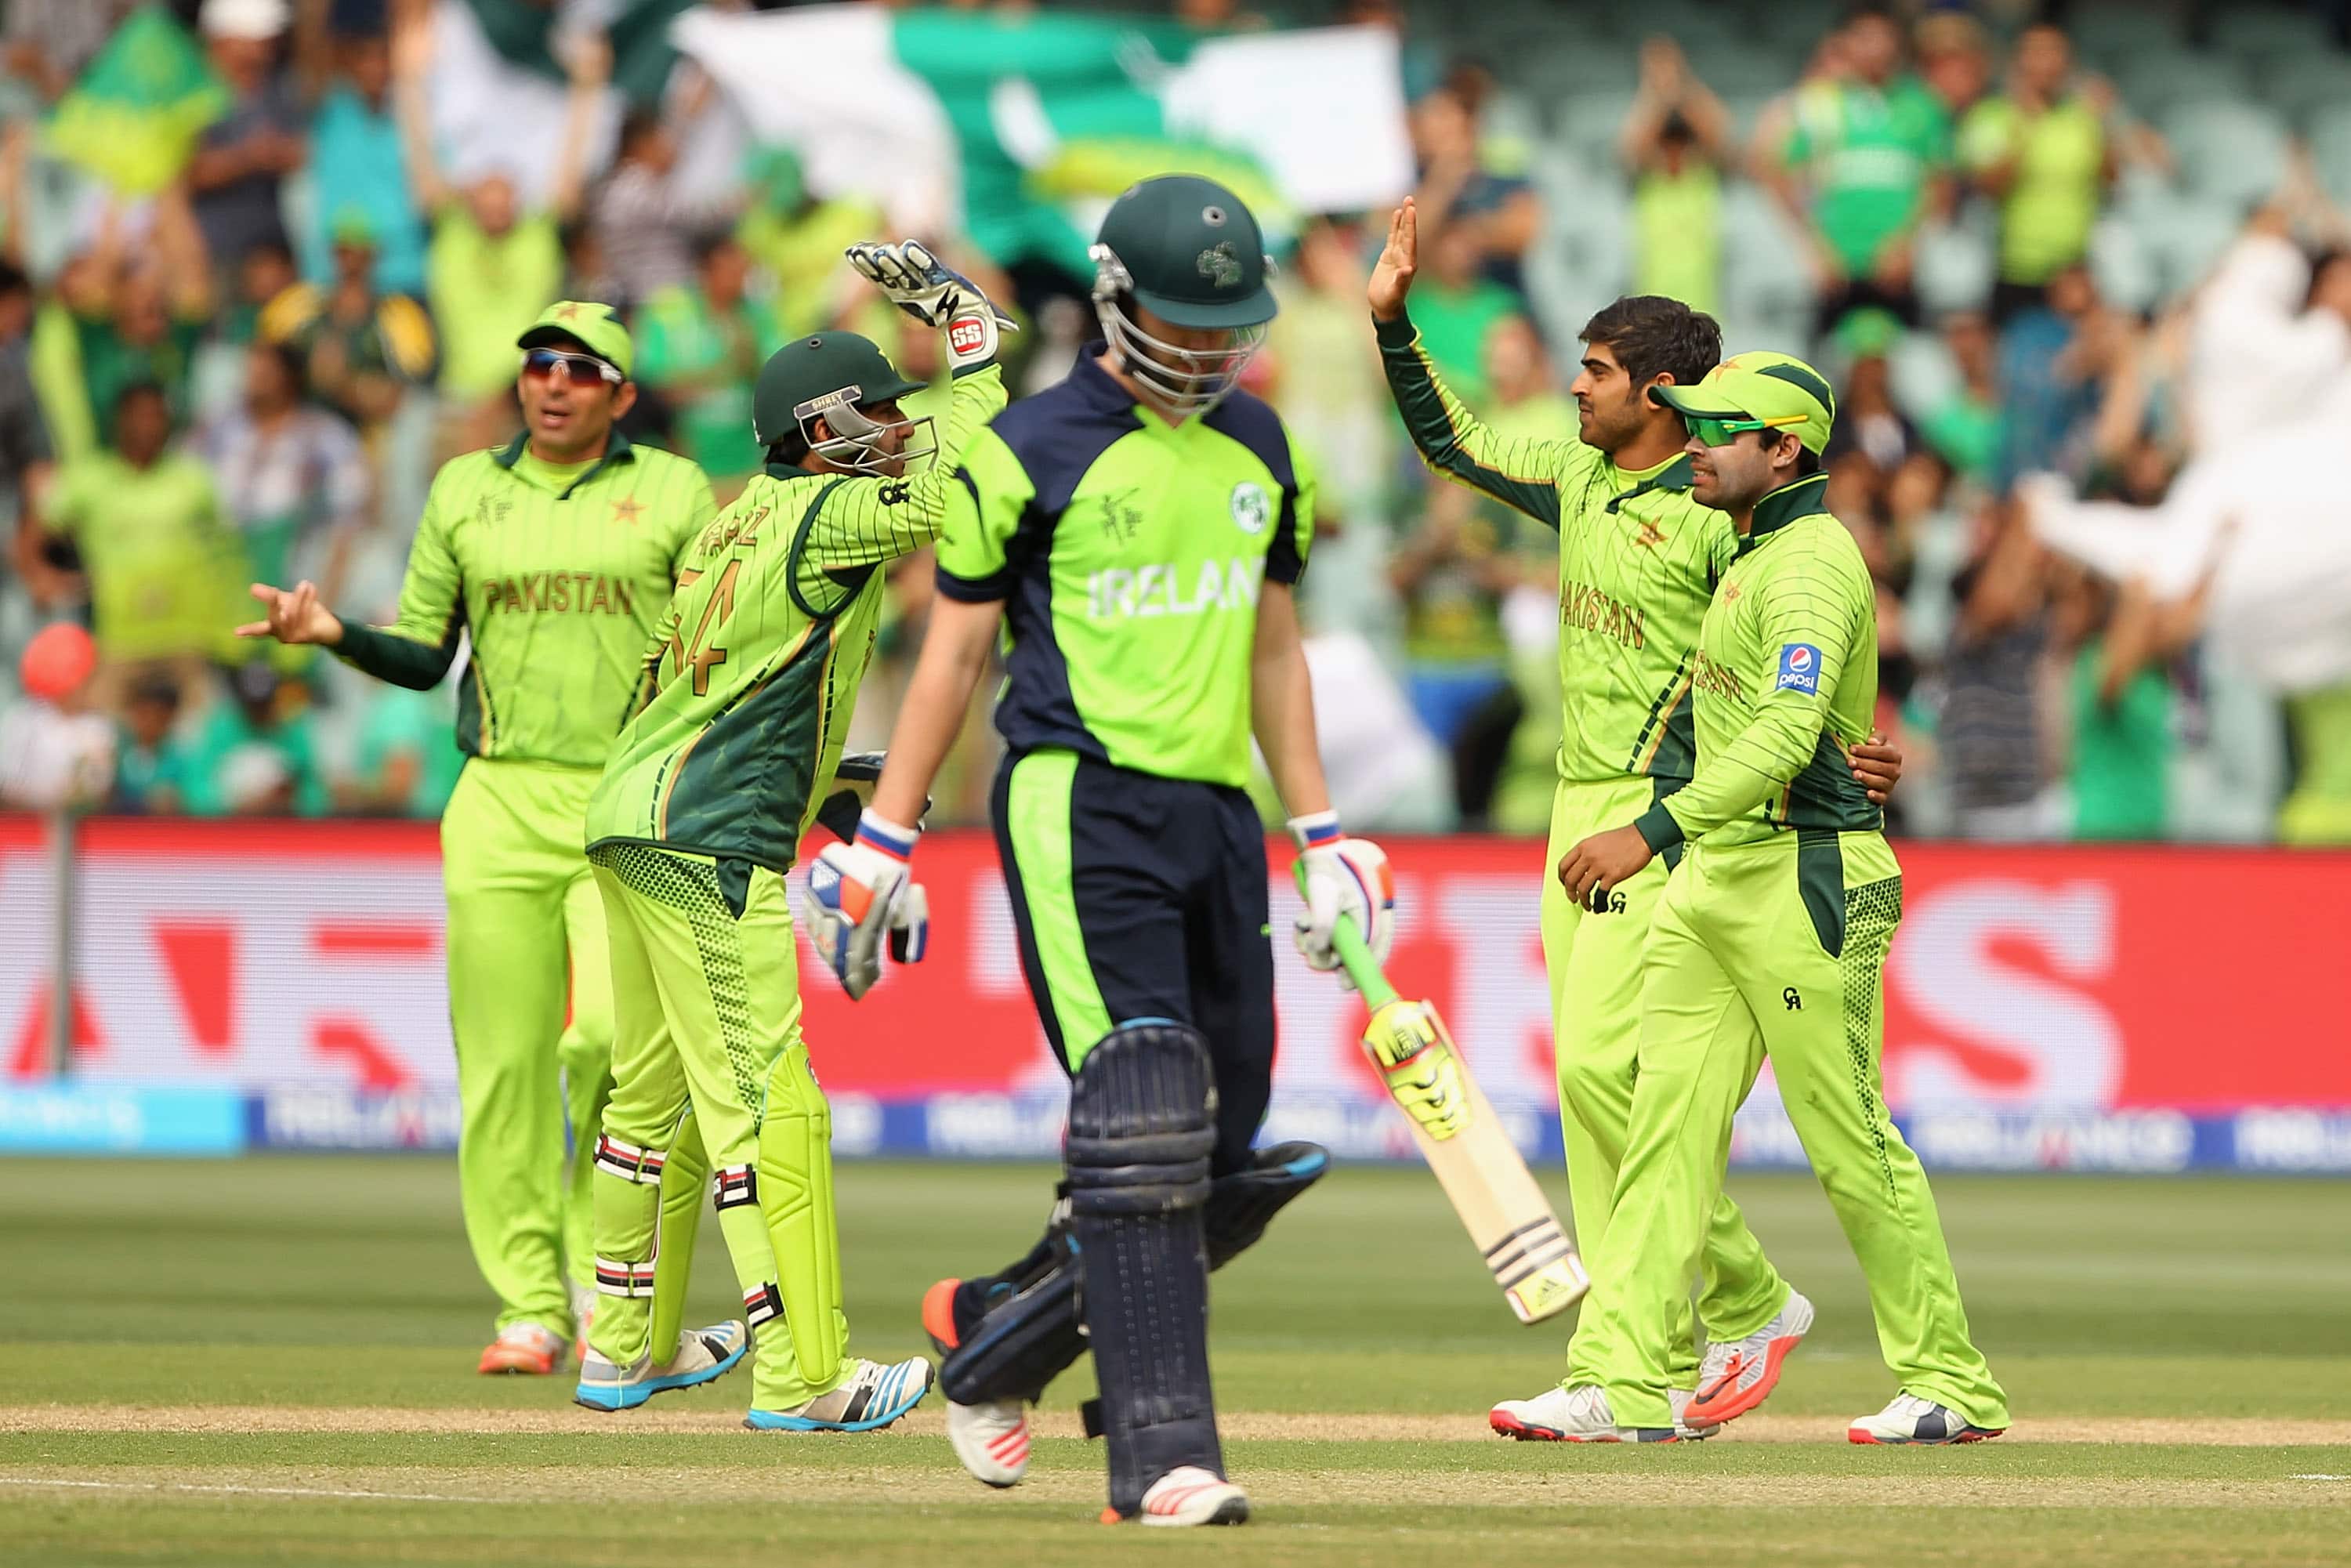 Pakistan vs Ireland ICC Cricket World Cup 2015, Pool B match 42 at